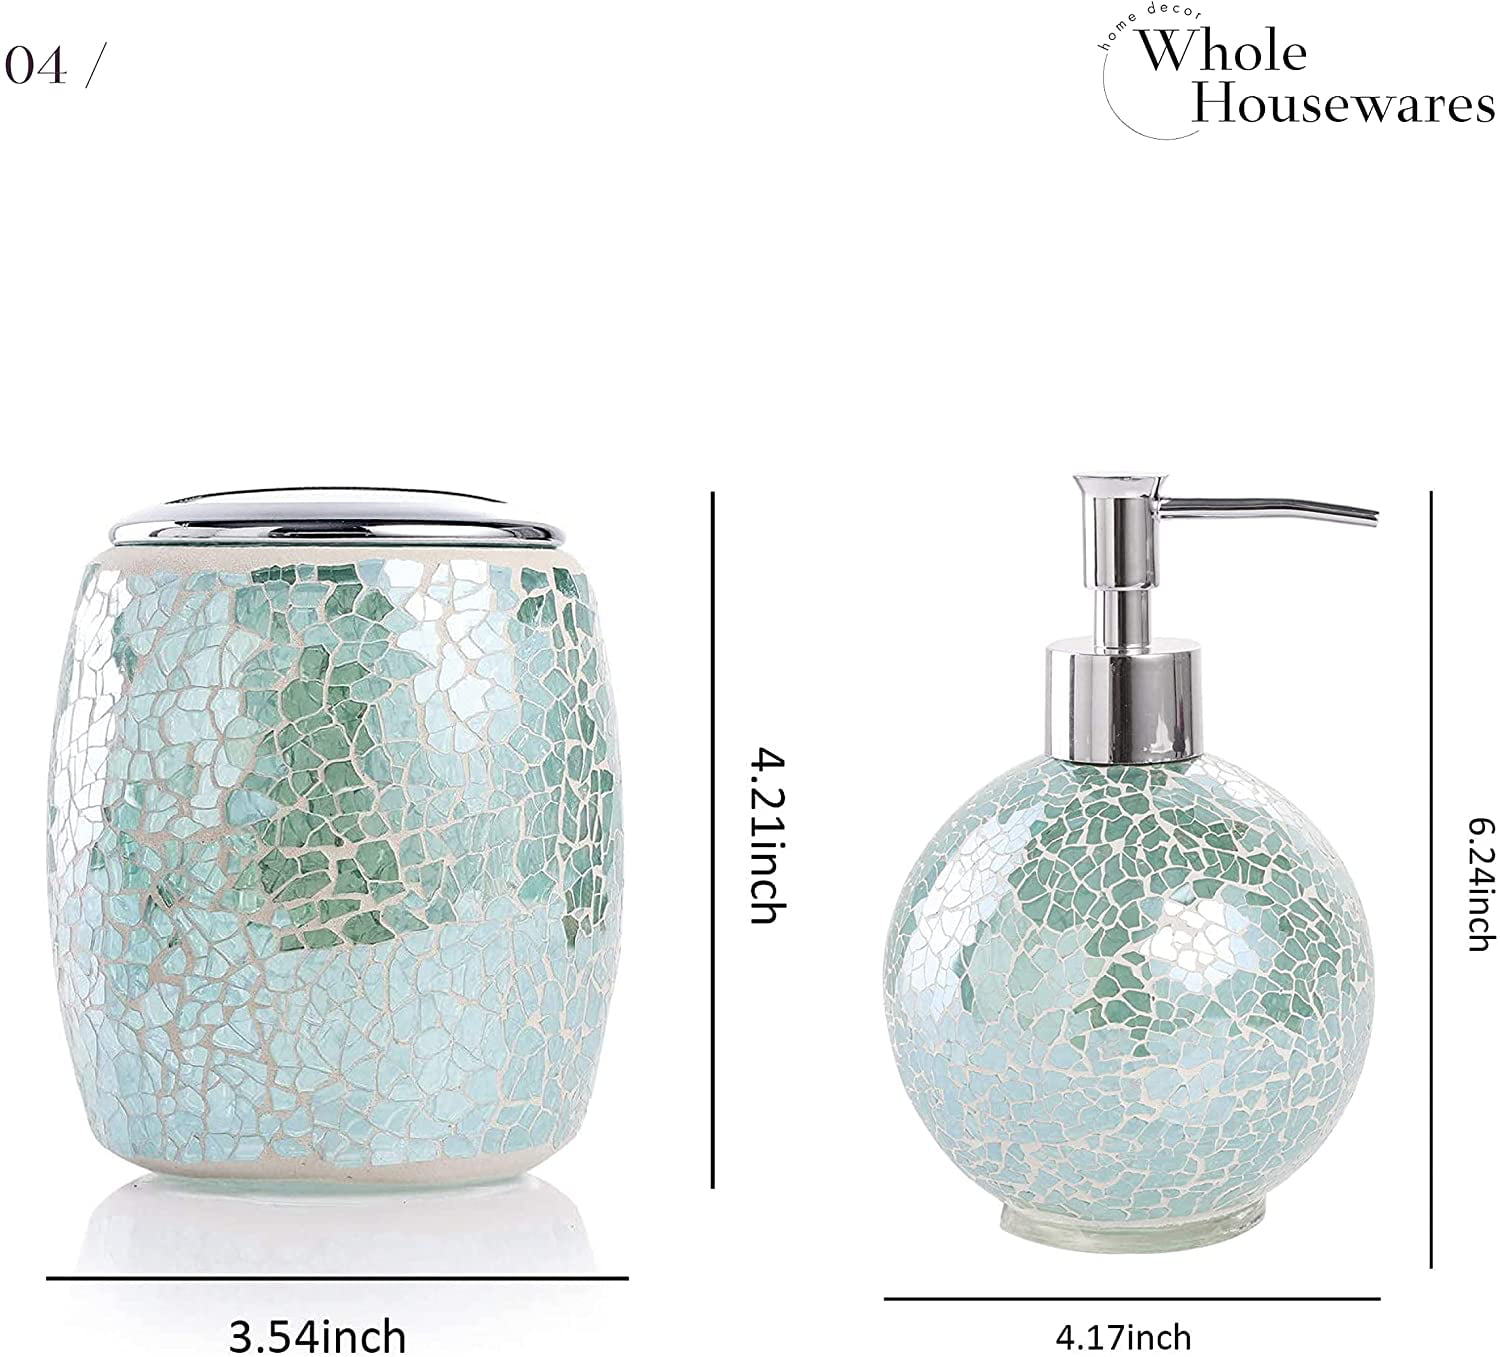 NEW IRIDESCENT TEAL GREEN REFLECTIVE GLASS MOSAIC BATHROOM SOAP DISPENSER 